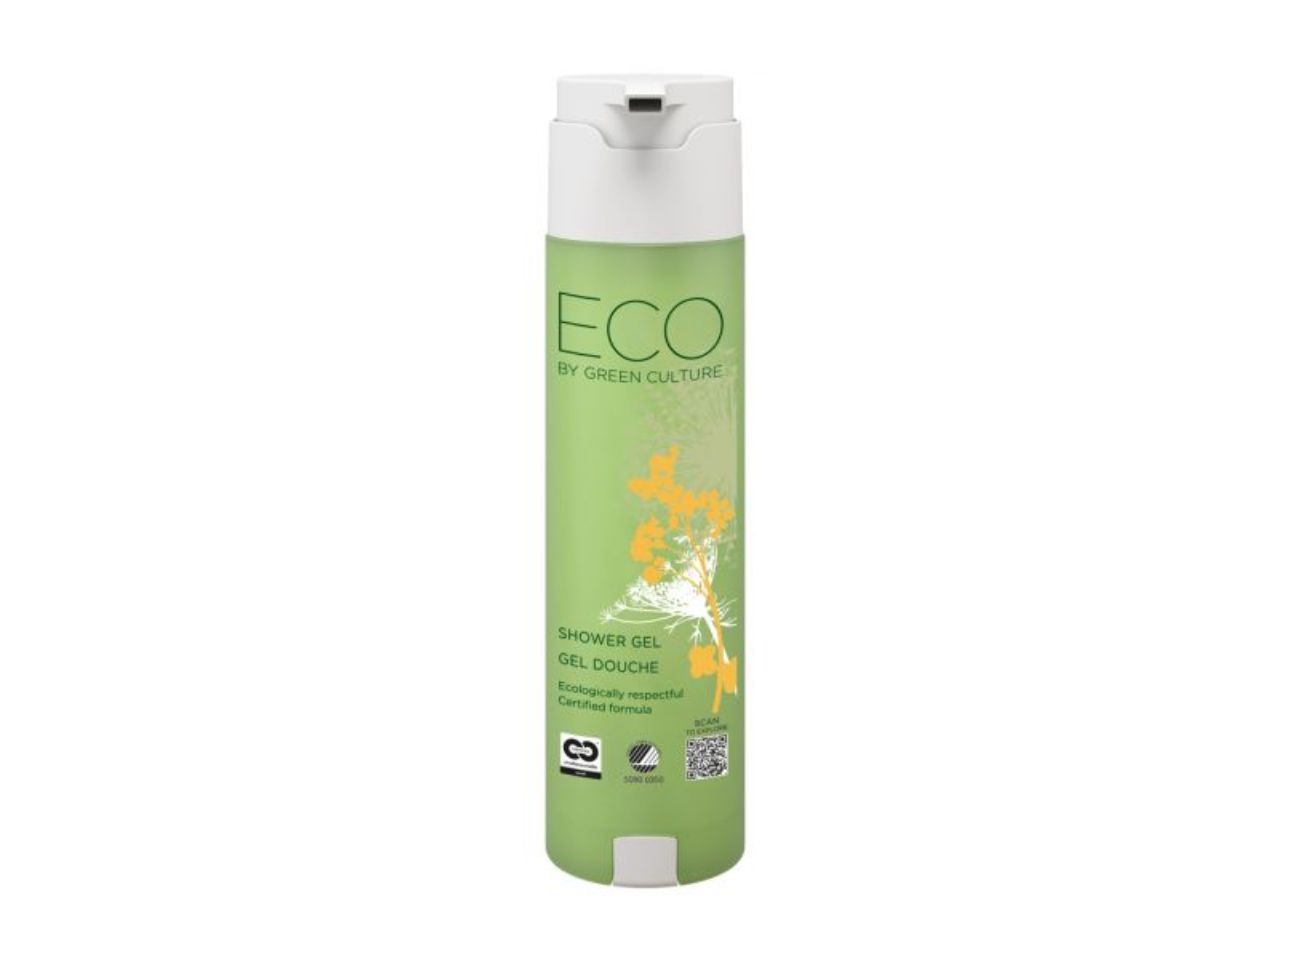  ECO by Green Culture - Duschgel, 300 ml, Shape Spender